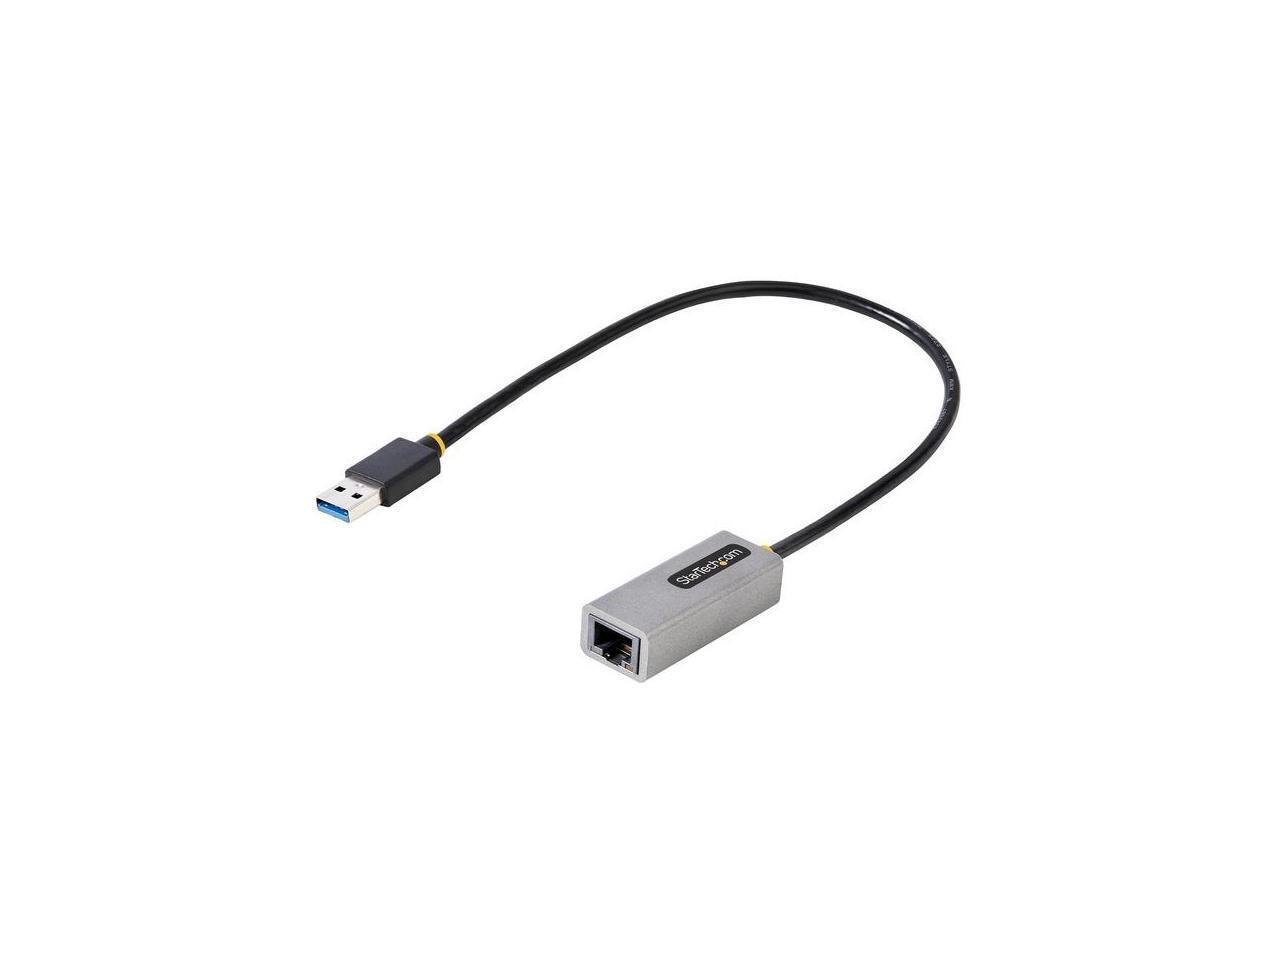 StarTech.com USB to Ethernet Adapter USB 3.0 to 10/100/1000 Gigabit Ethernet LAN